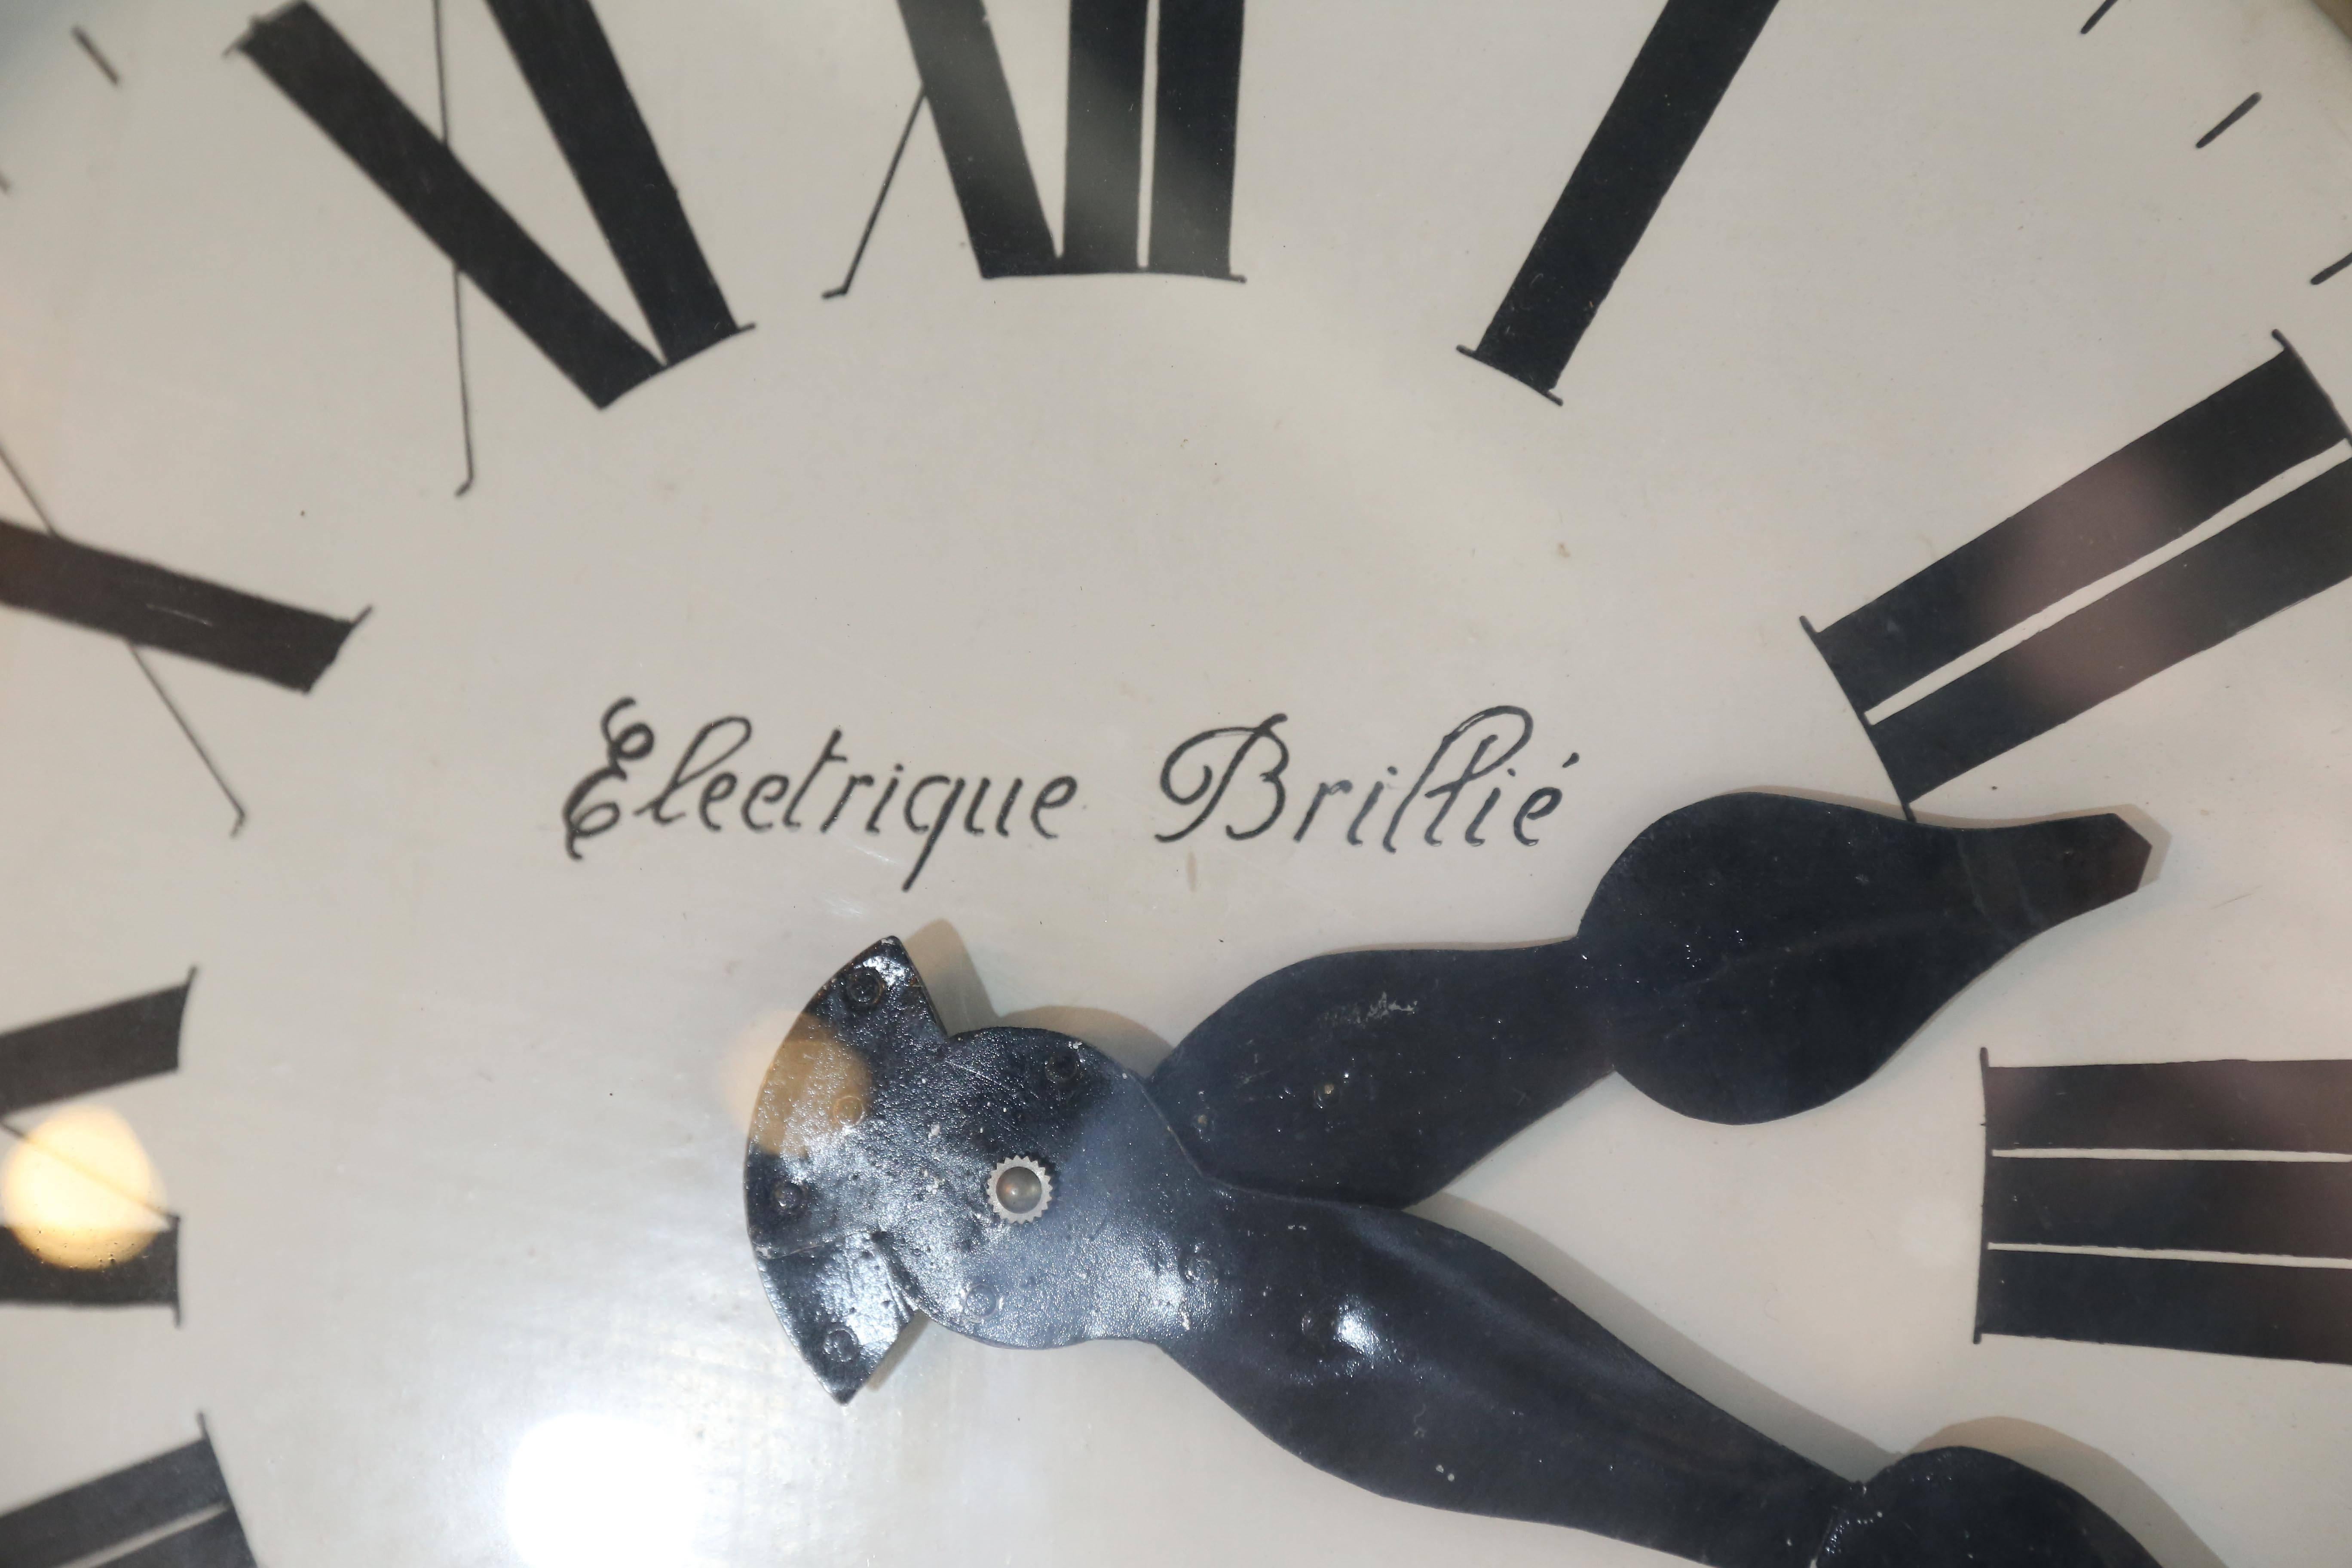 brillie clock for sale